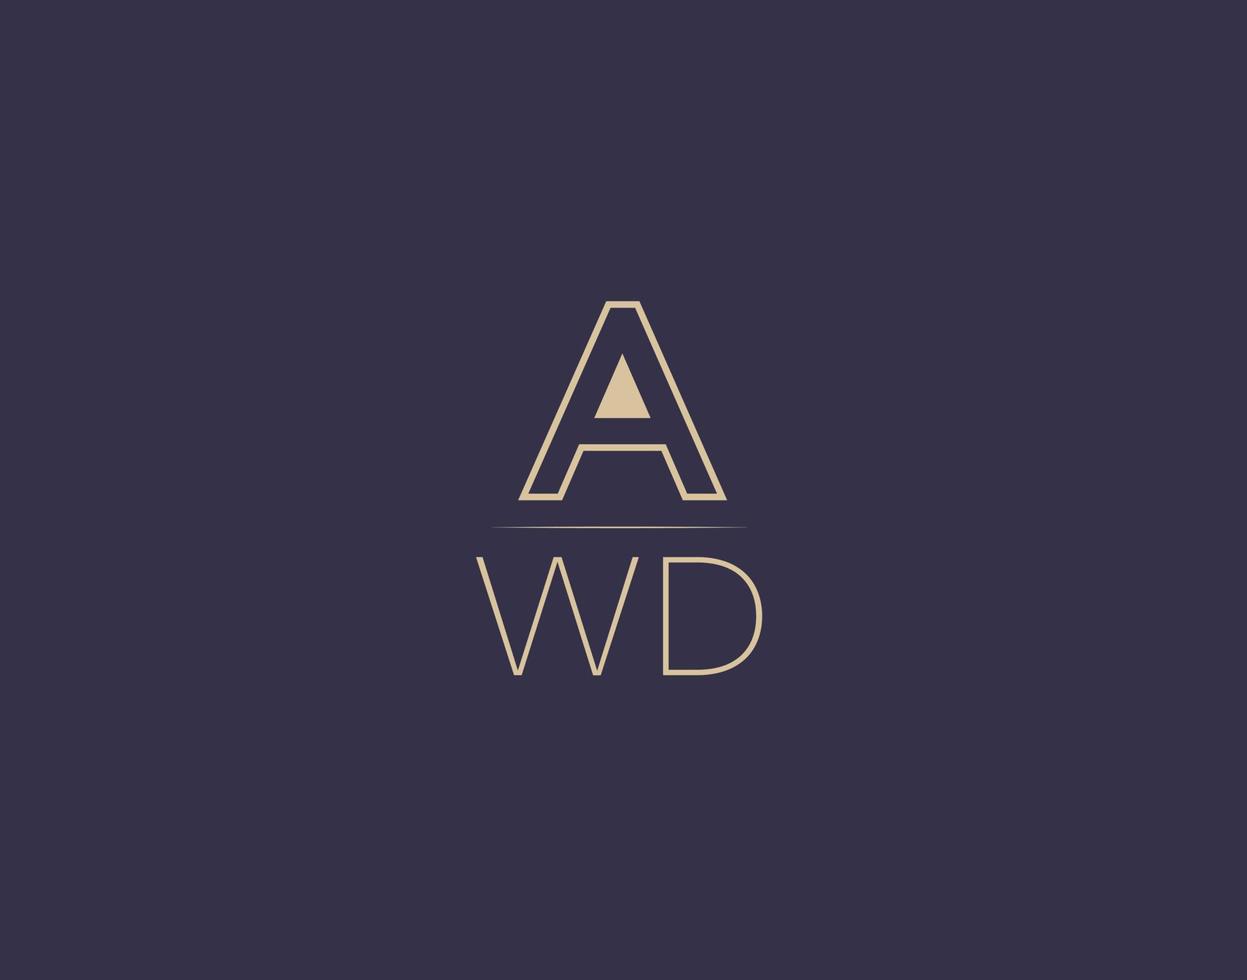 AWD letter logo design modern minimalist vector images